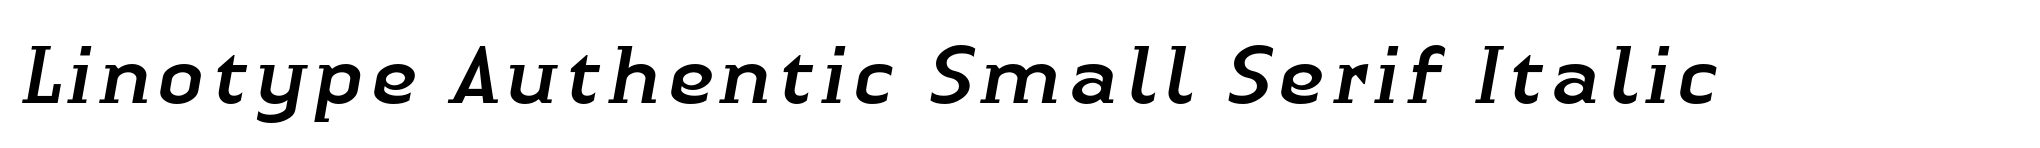 Linotype Authentic Small Serif Italic image